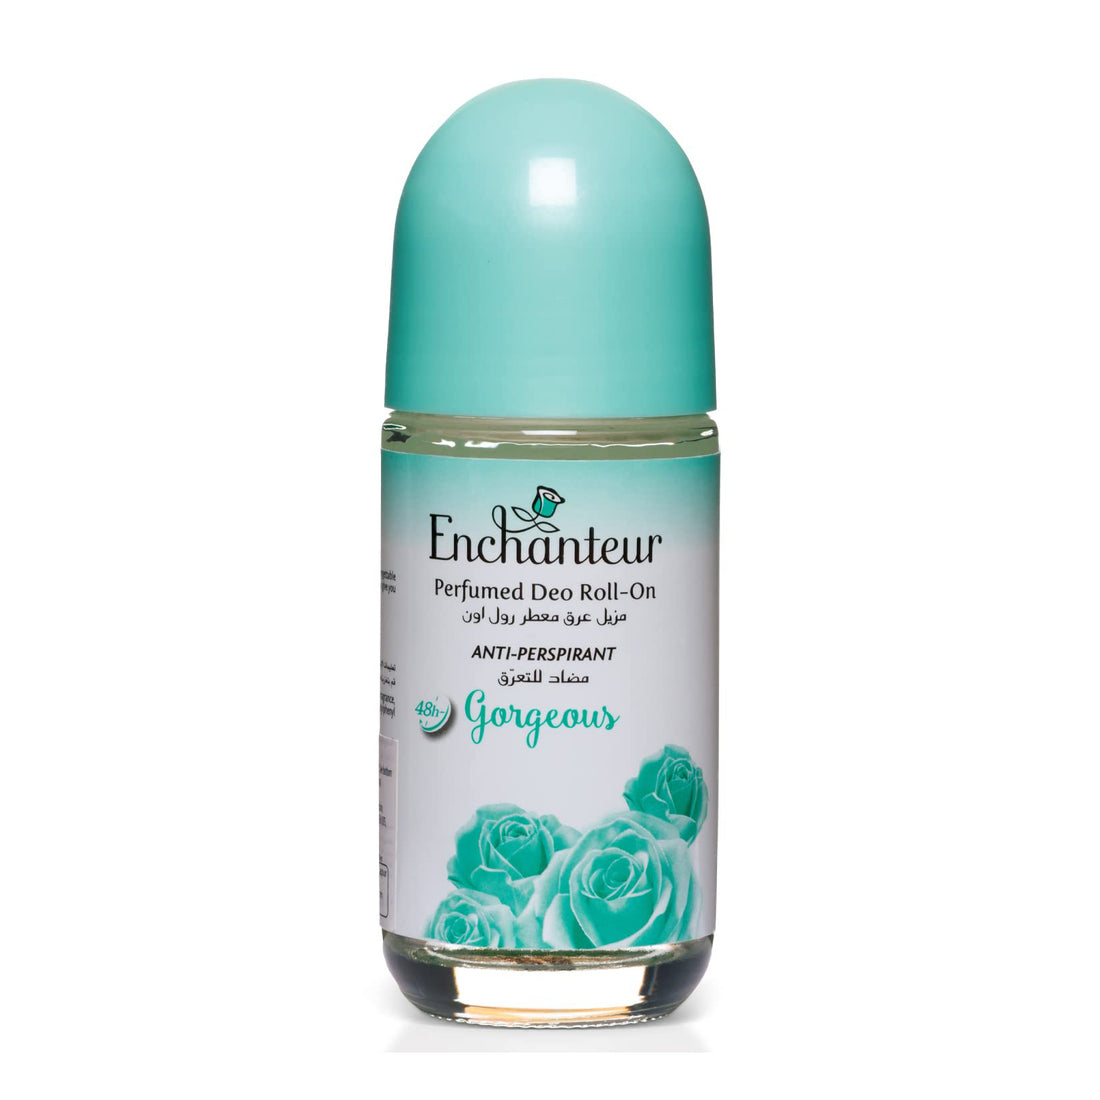 Enchanteur Perfumed Deo Roll On Gorgeous (50ml)